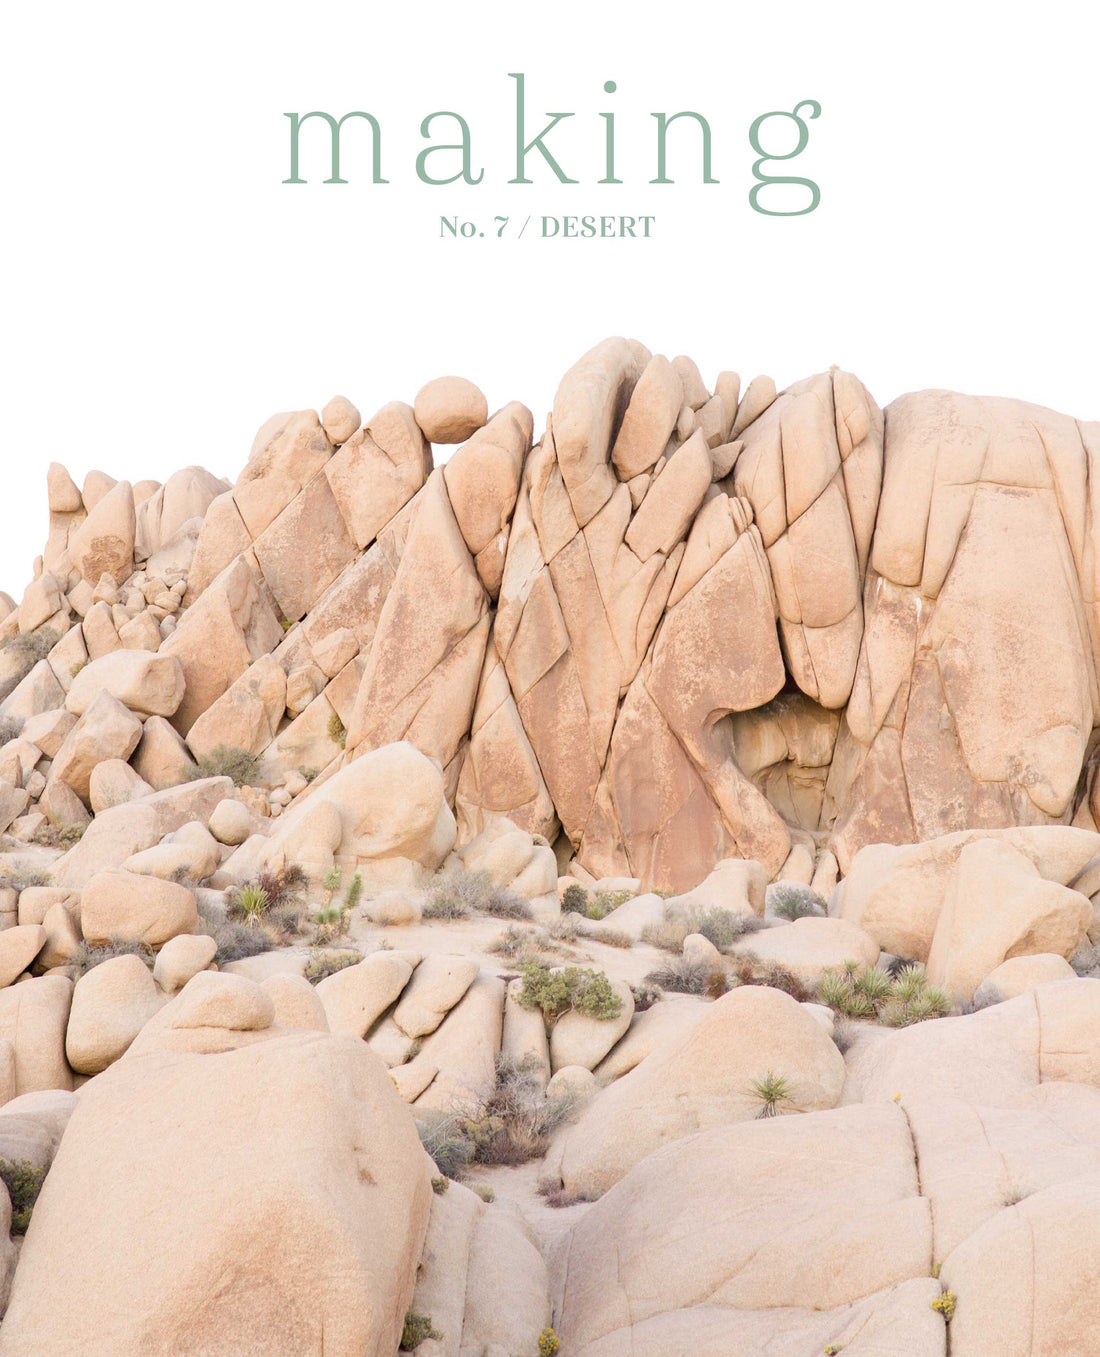 Making - No. 7 Desert